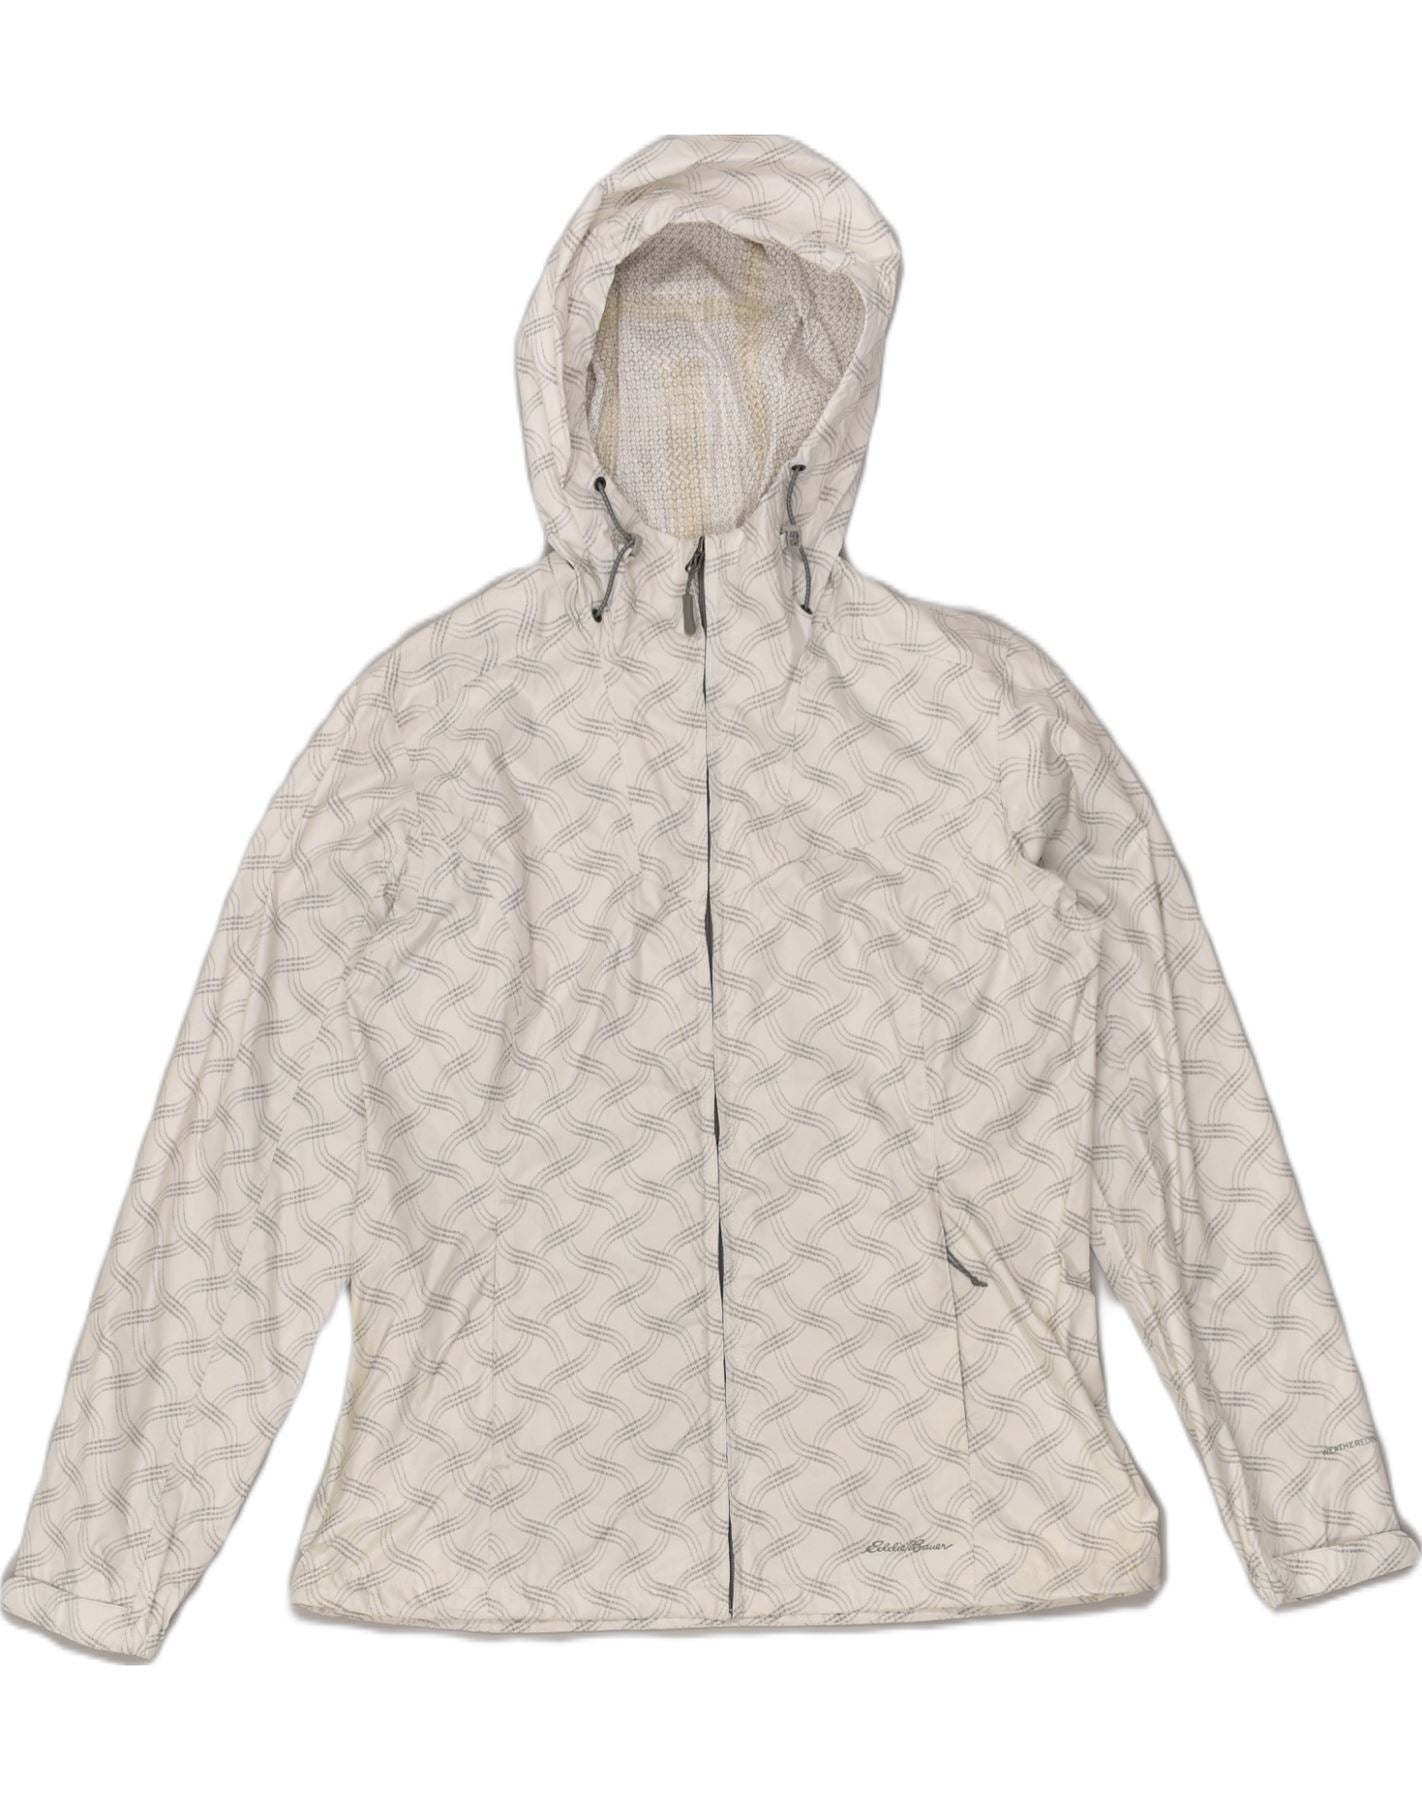 EDDIE BAUER Womens Hooded Rain Jacket UK 14 Medium White Check Nylon, Vintage & Second-Hand Clothing Online